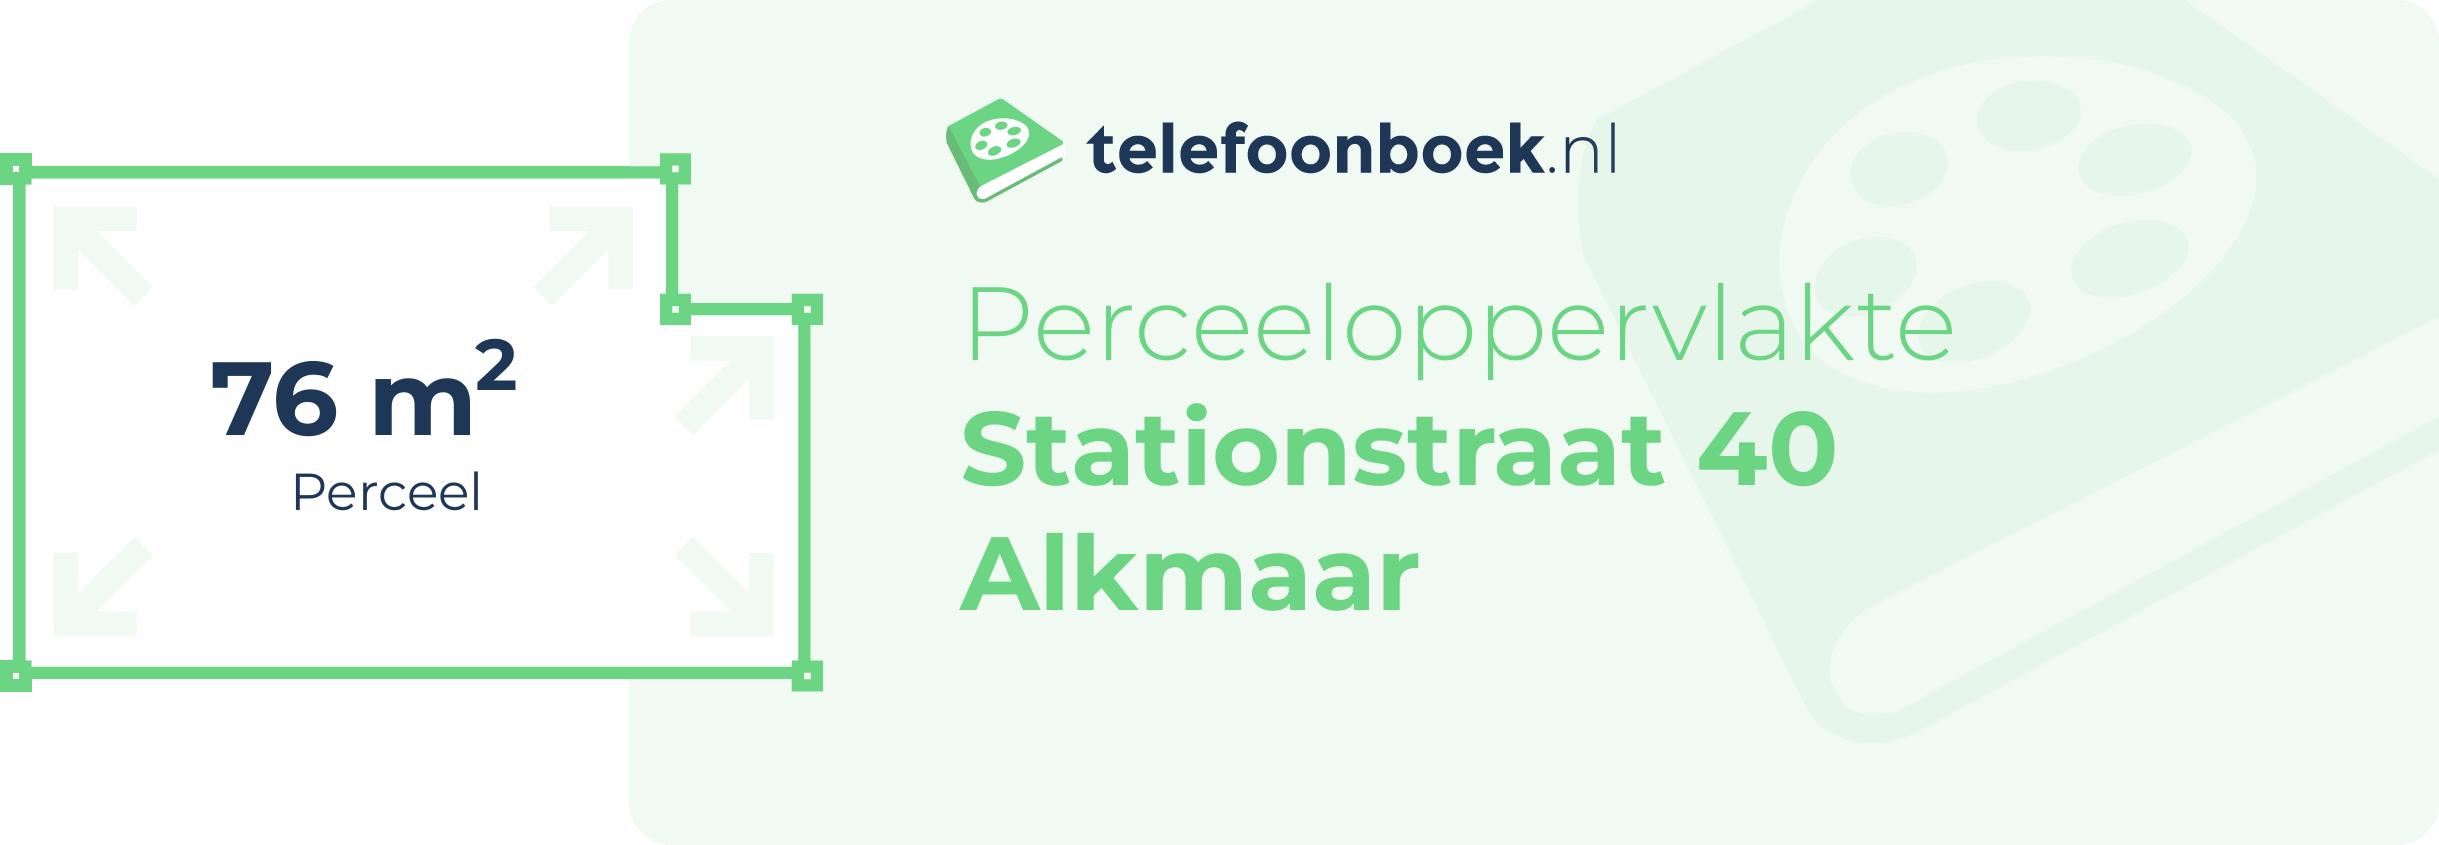 Perceeloppervlakte Stationstraat 40 Alkmaar